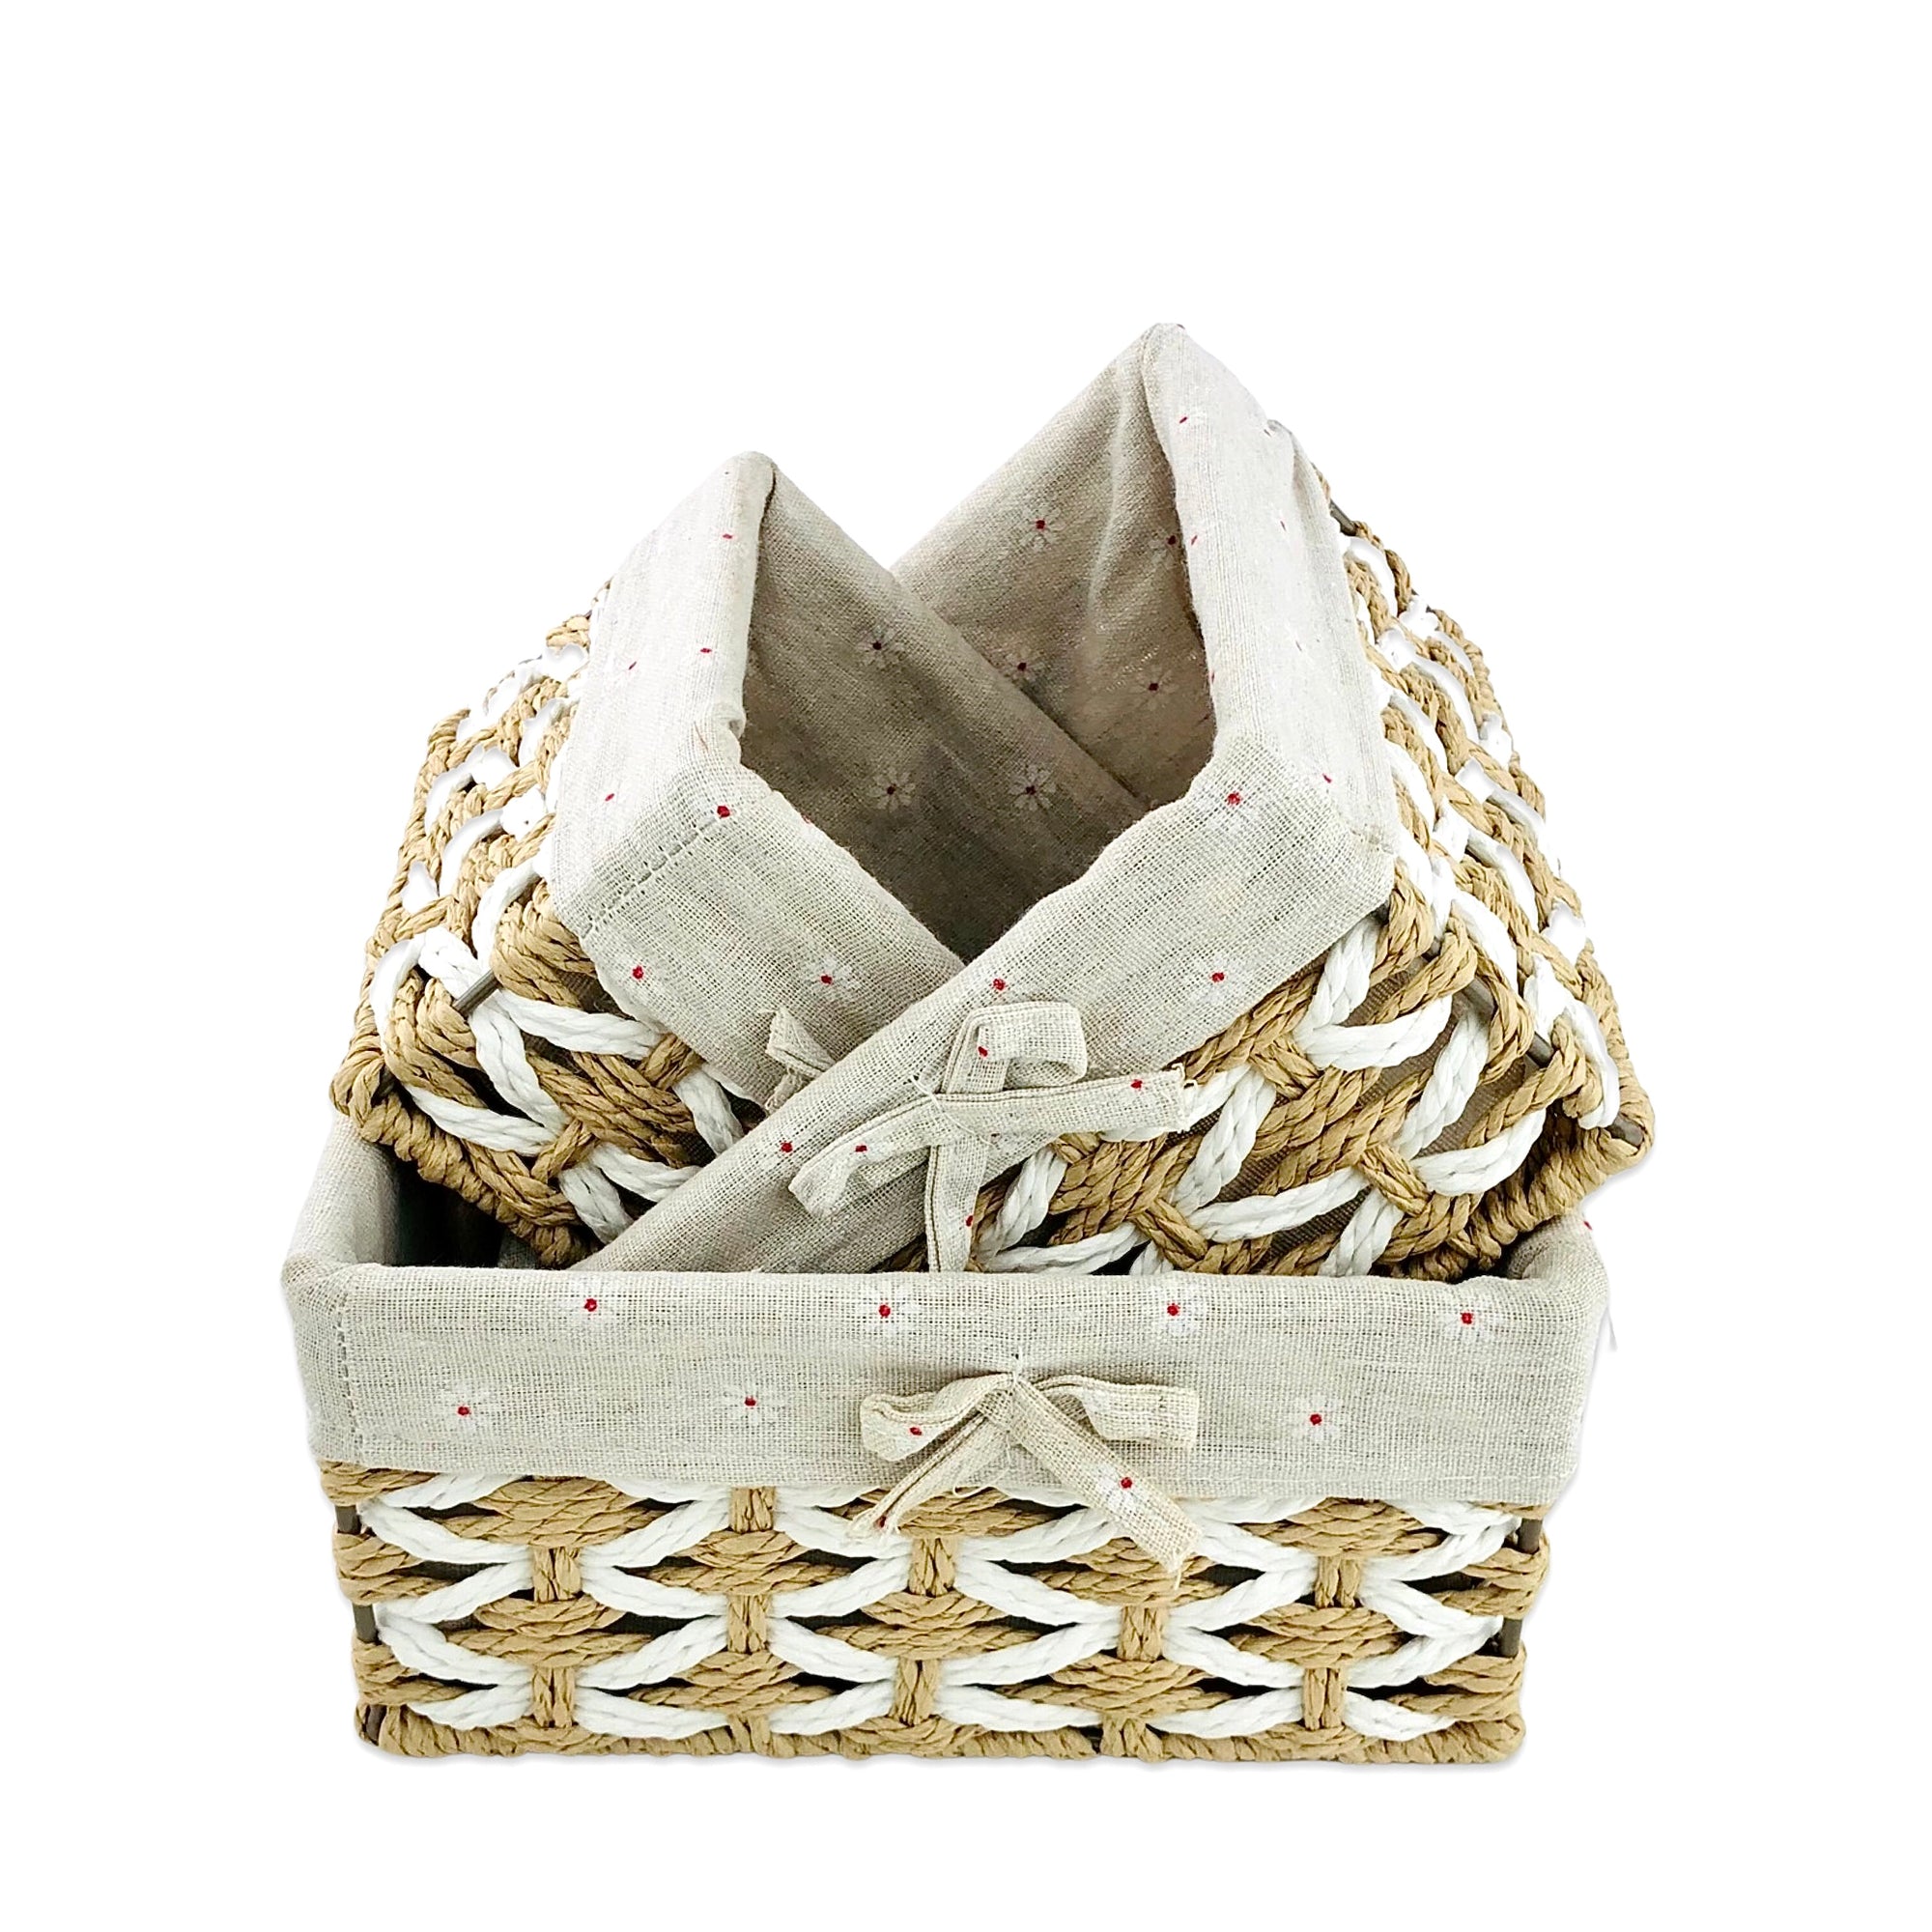 Square Perlman Jute & Linen Towel Basket  (Set of 3)